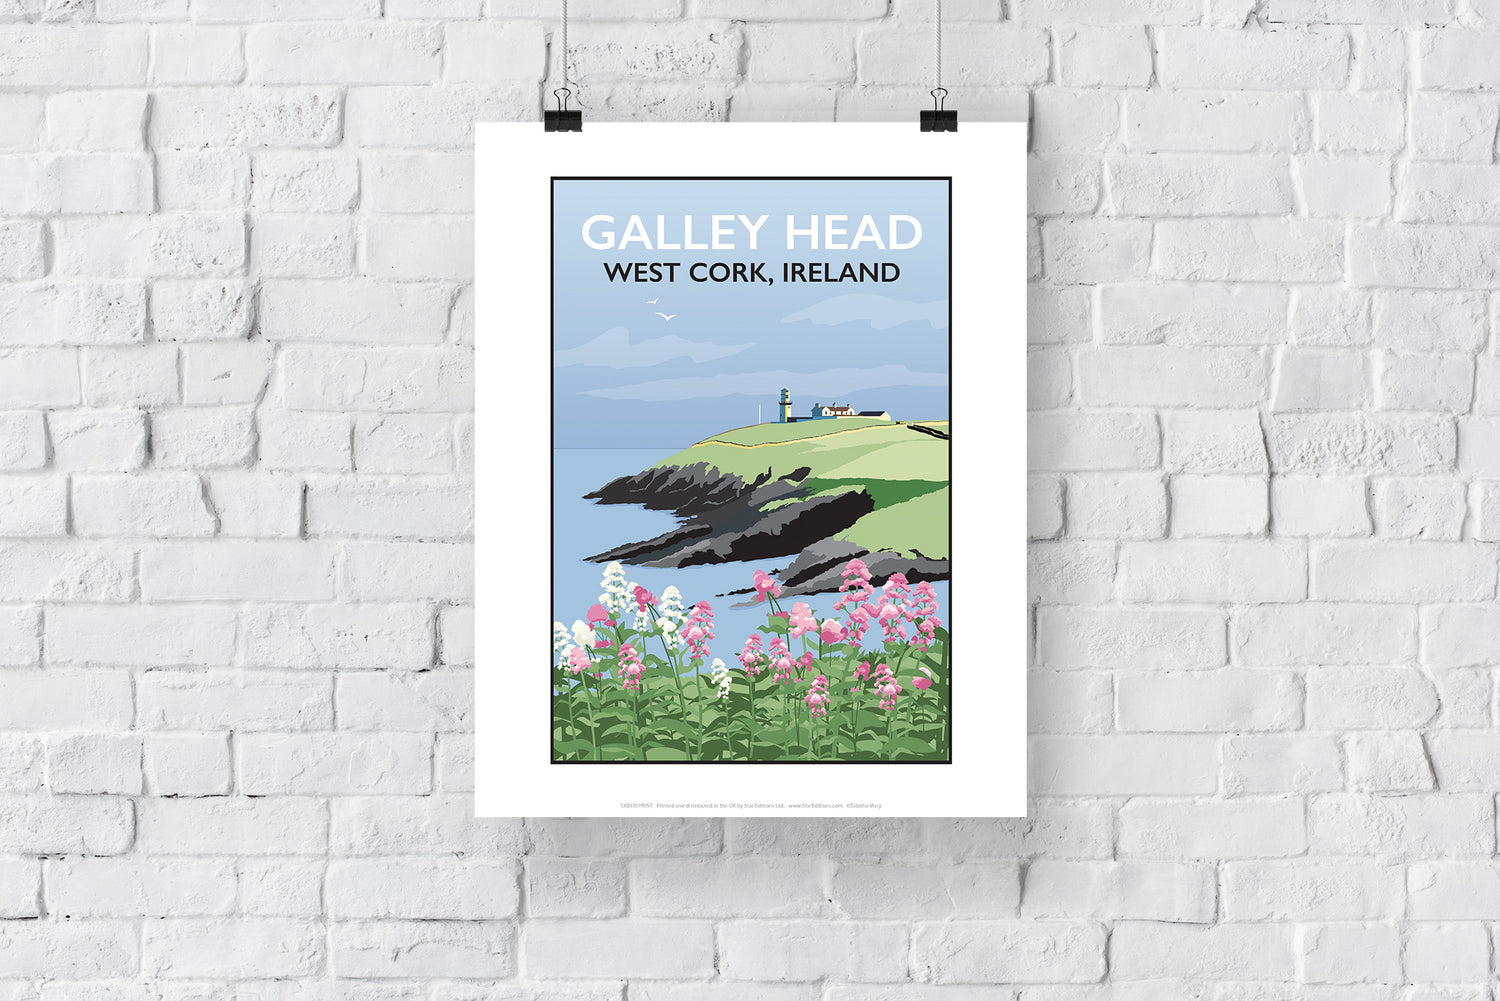 Galley Head, West Cork - Art Print